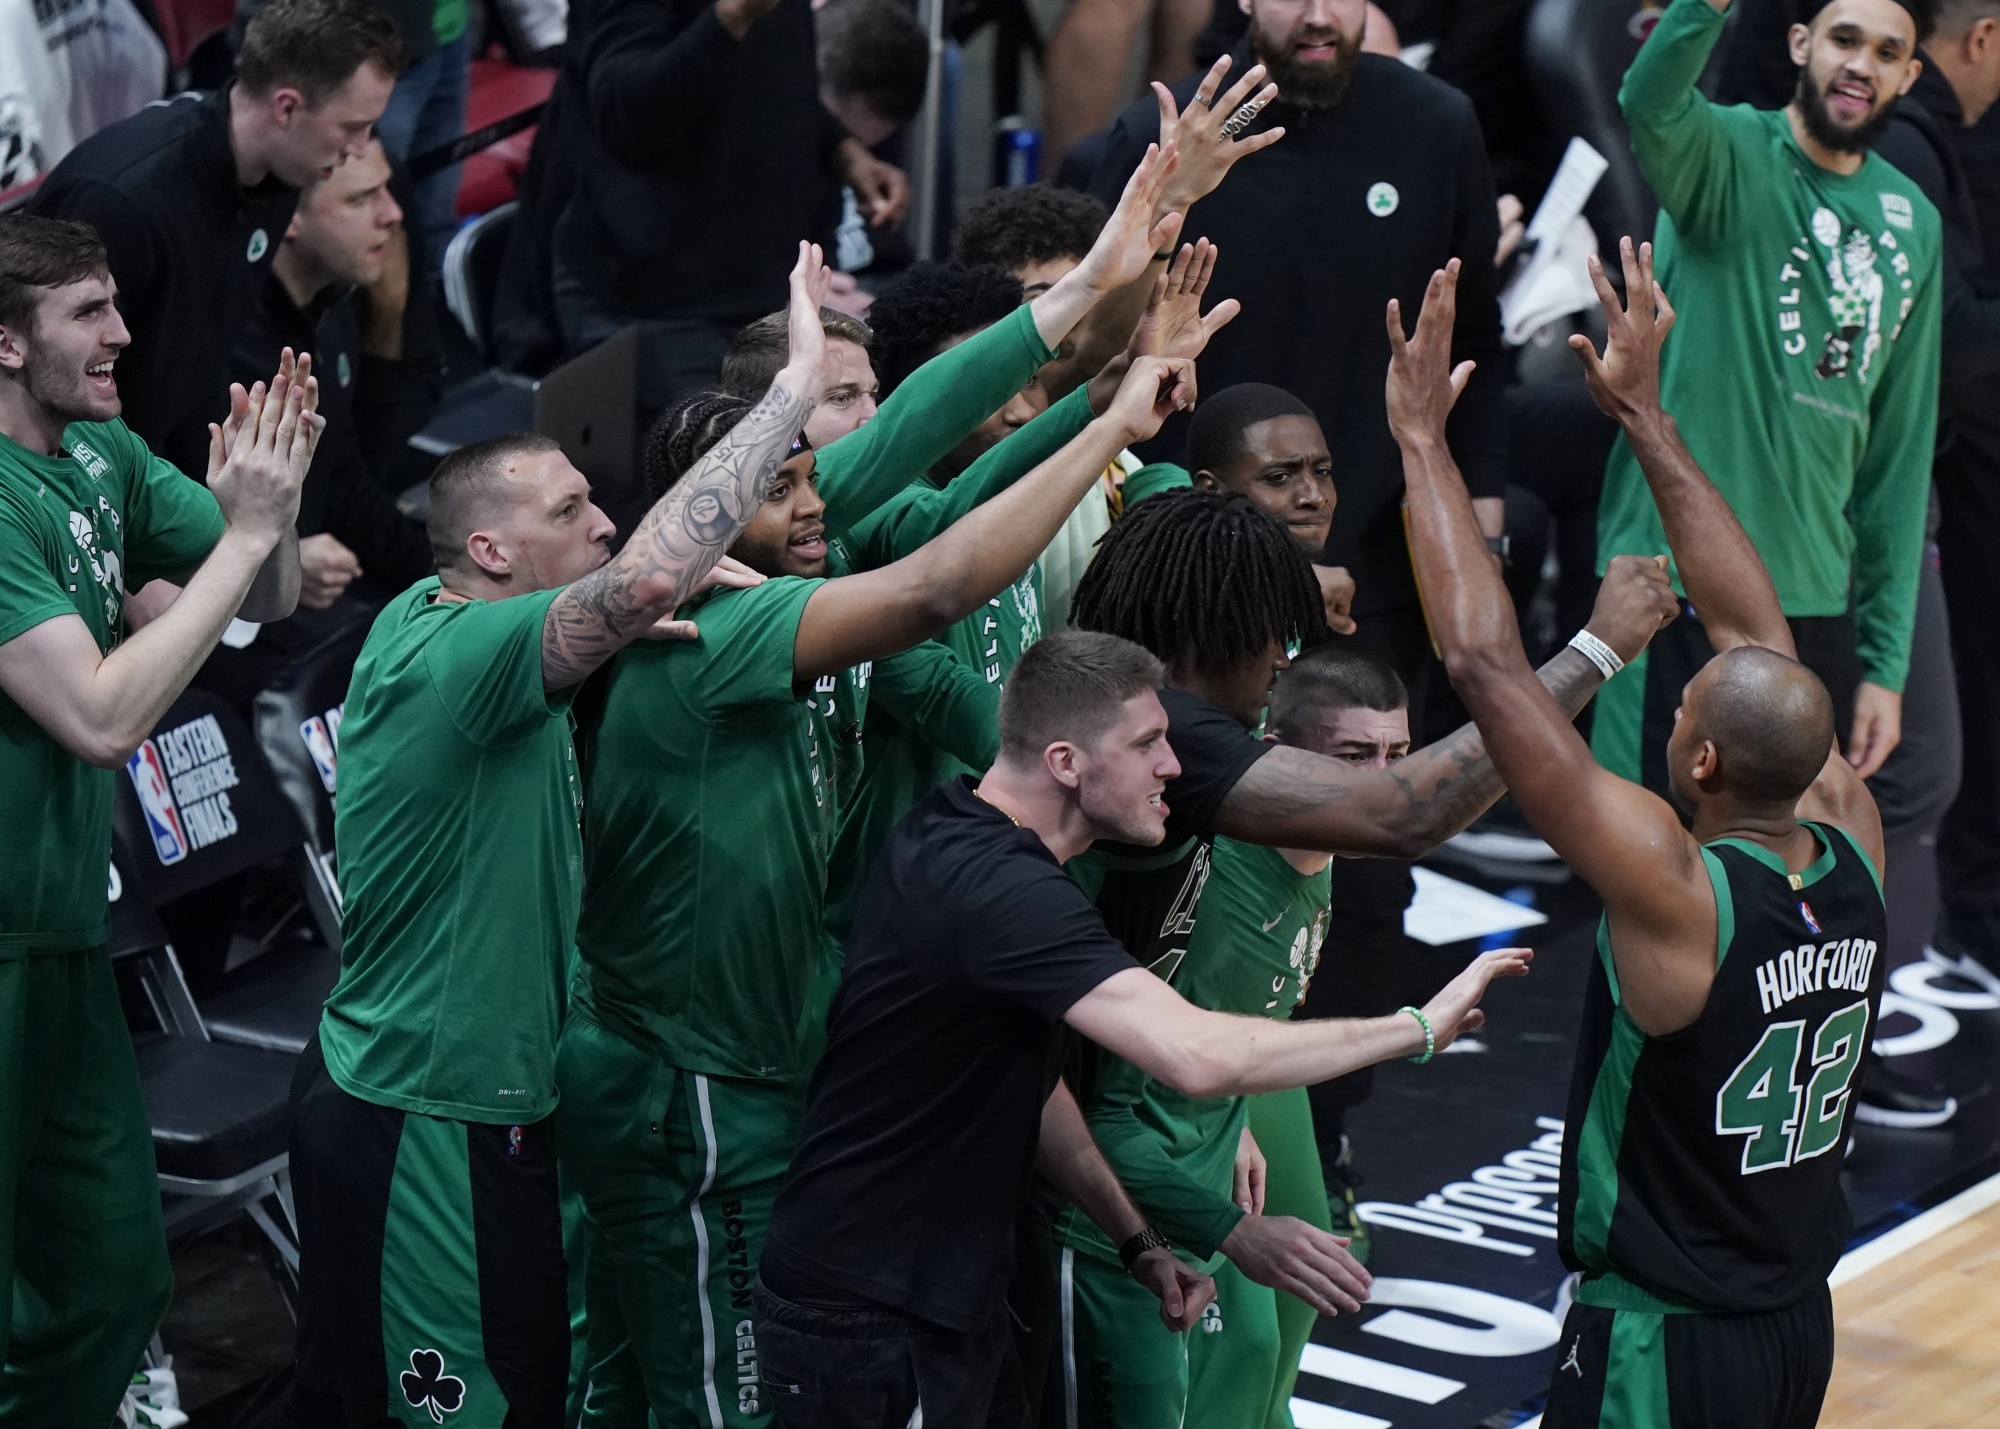 Miami Heat guard Jason Williams keeps ahead of Boston Celtics